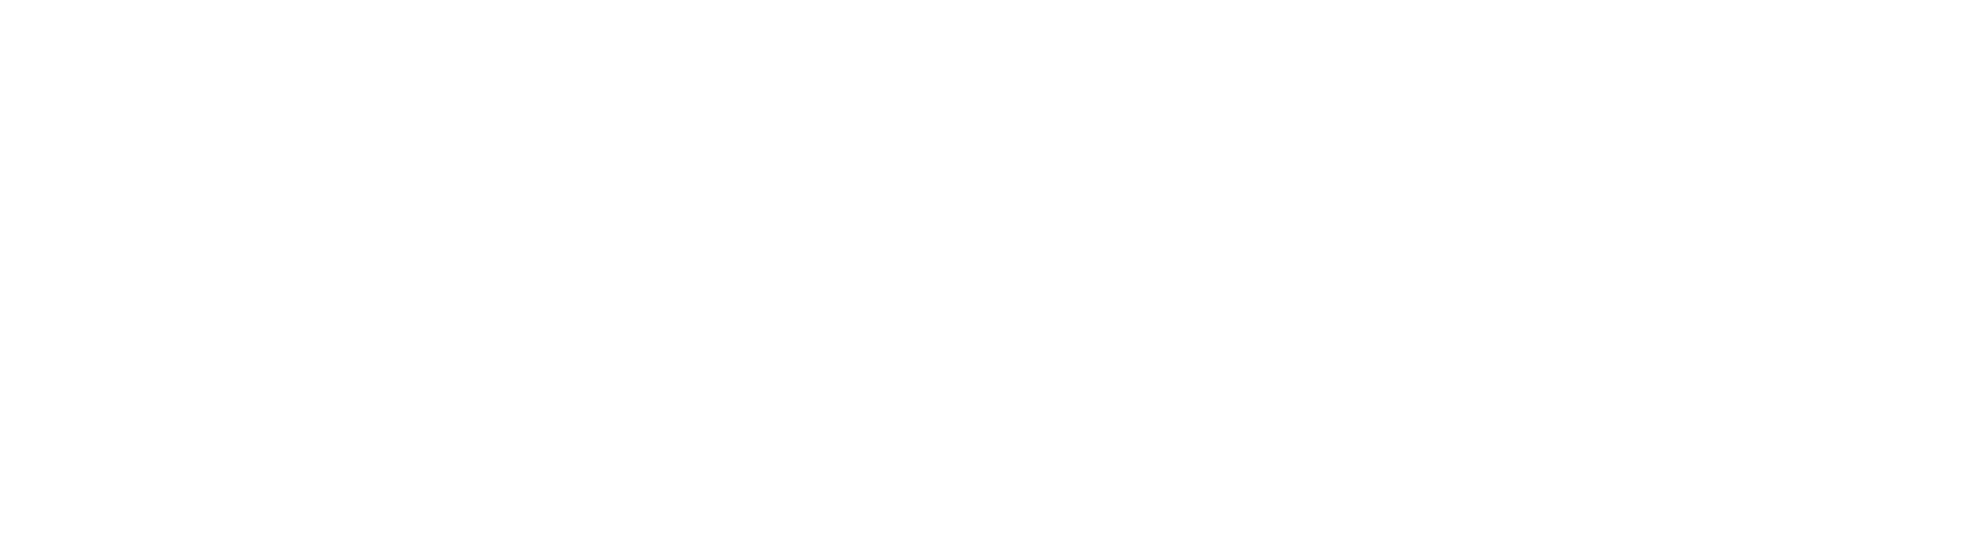 Crown College Logo Image.